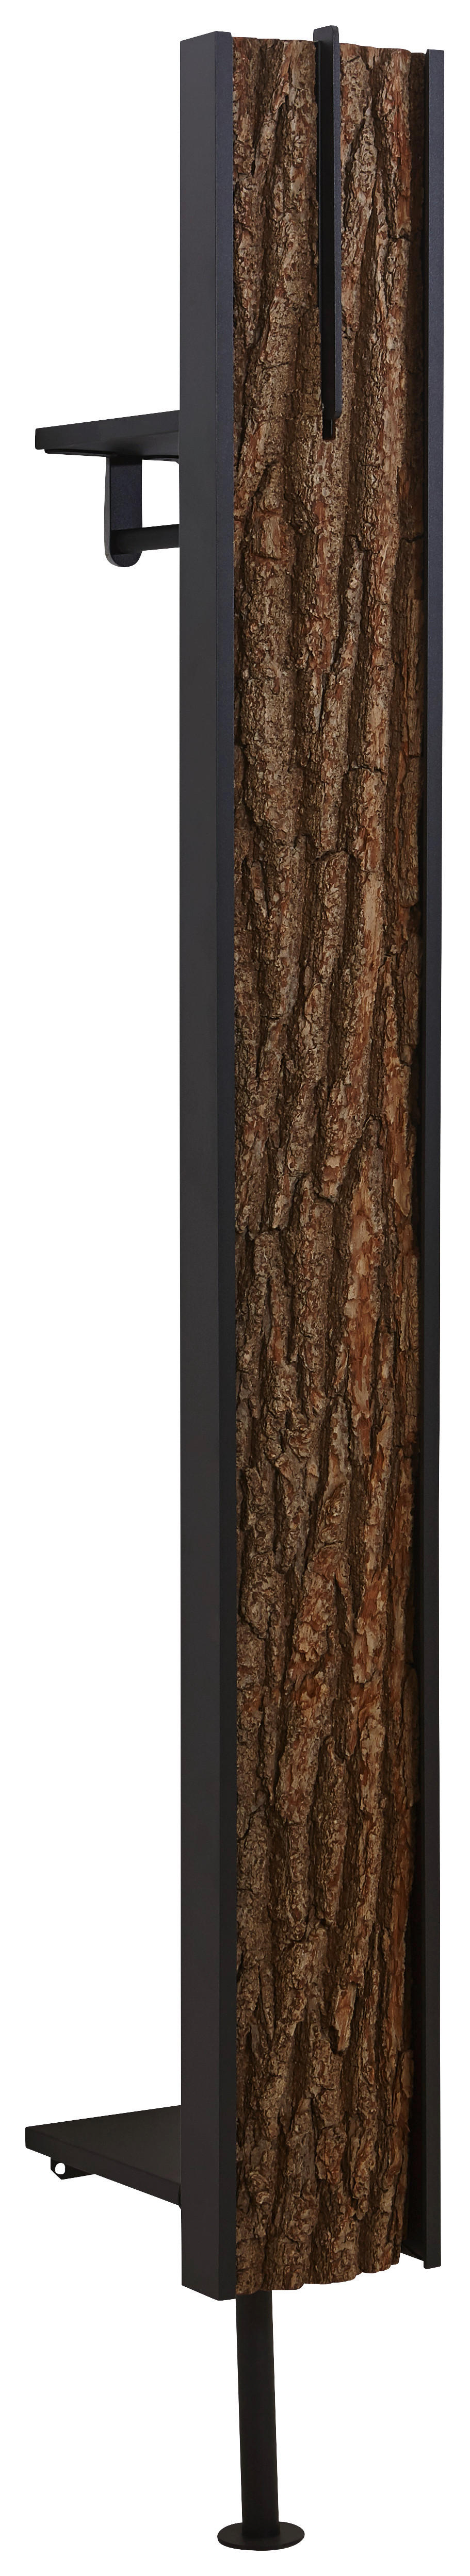 WANDGARDEROBE Kerneiche vollmassiv Anthrazit, Eichefarben  - Eichefarben/Anthrazit, Design, Holz/Metall (20/191/28cm) - Valnatura